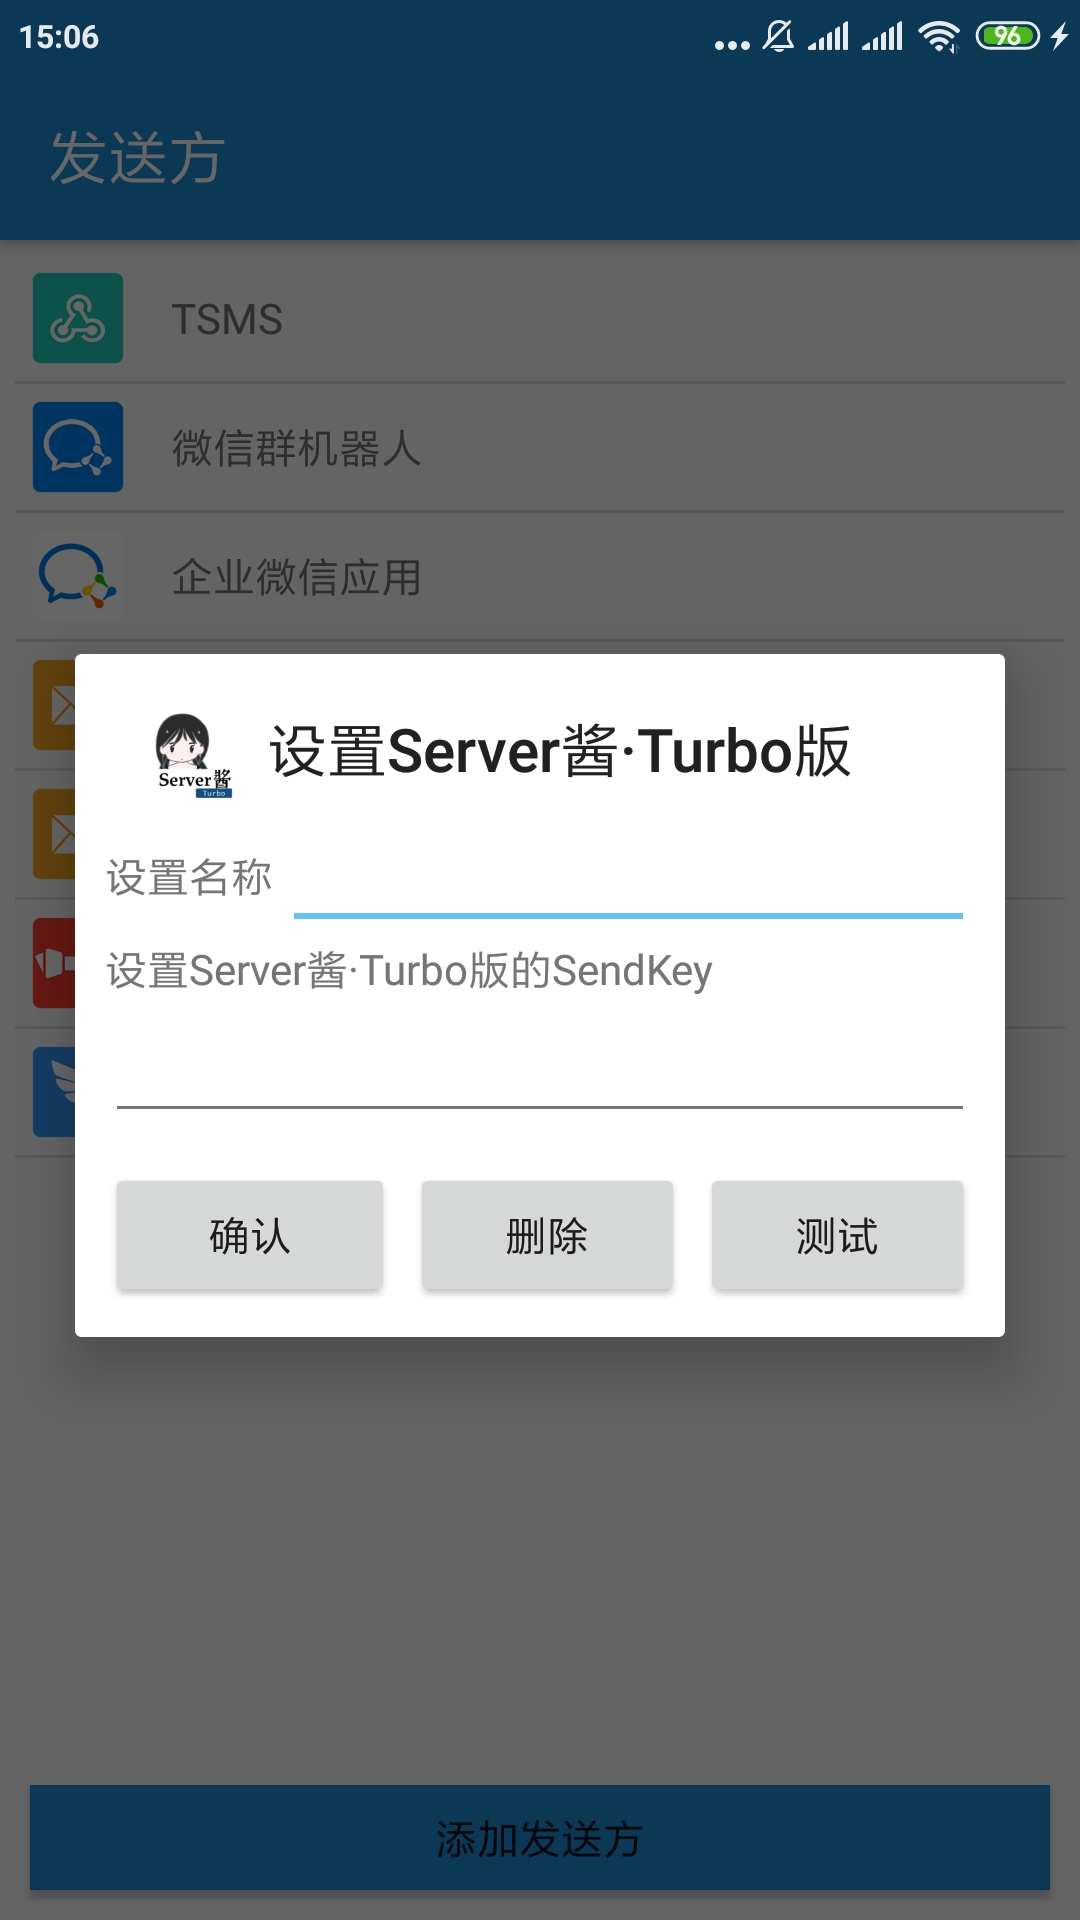 Add/Edit ServerChan Tubo sender